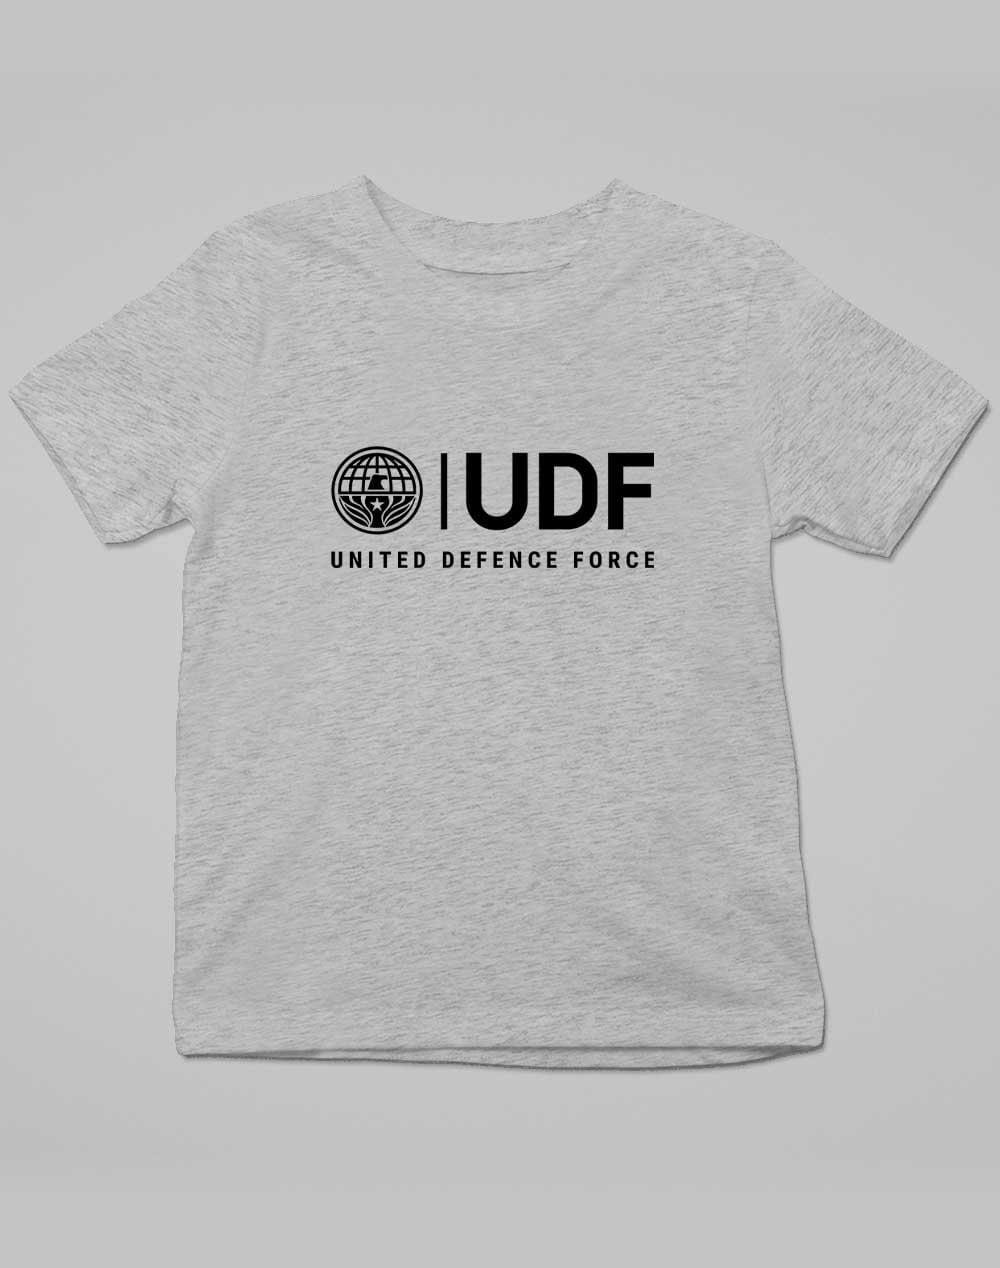 UDF United Defense Force Kids T-Shirt 3-4 years / Grey Marl  - Off World Tees